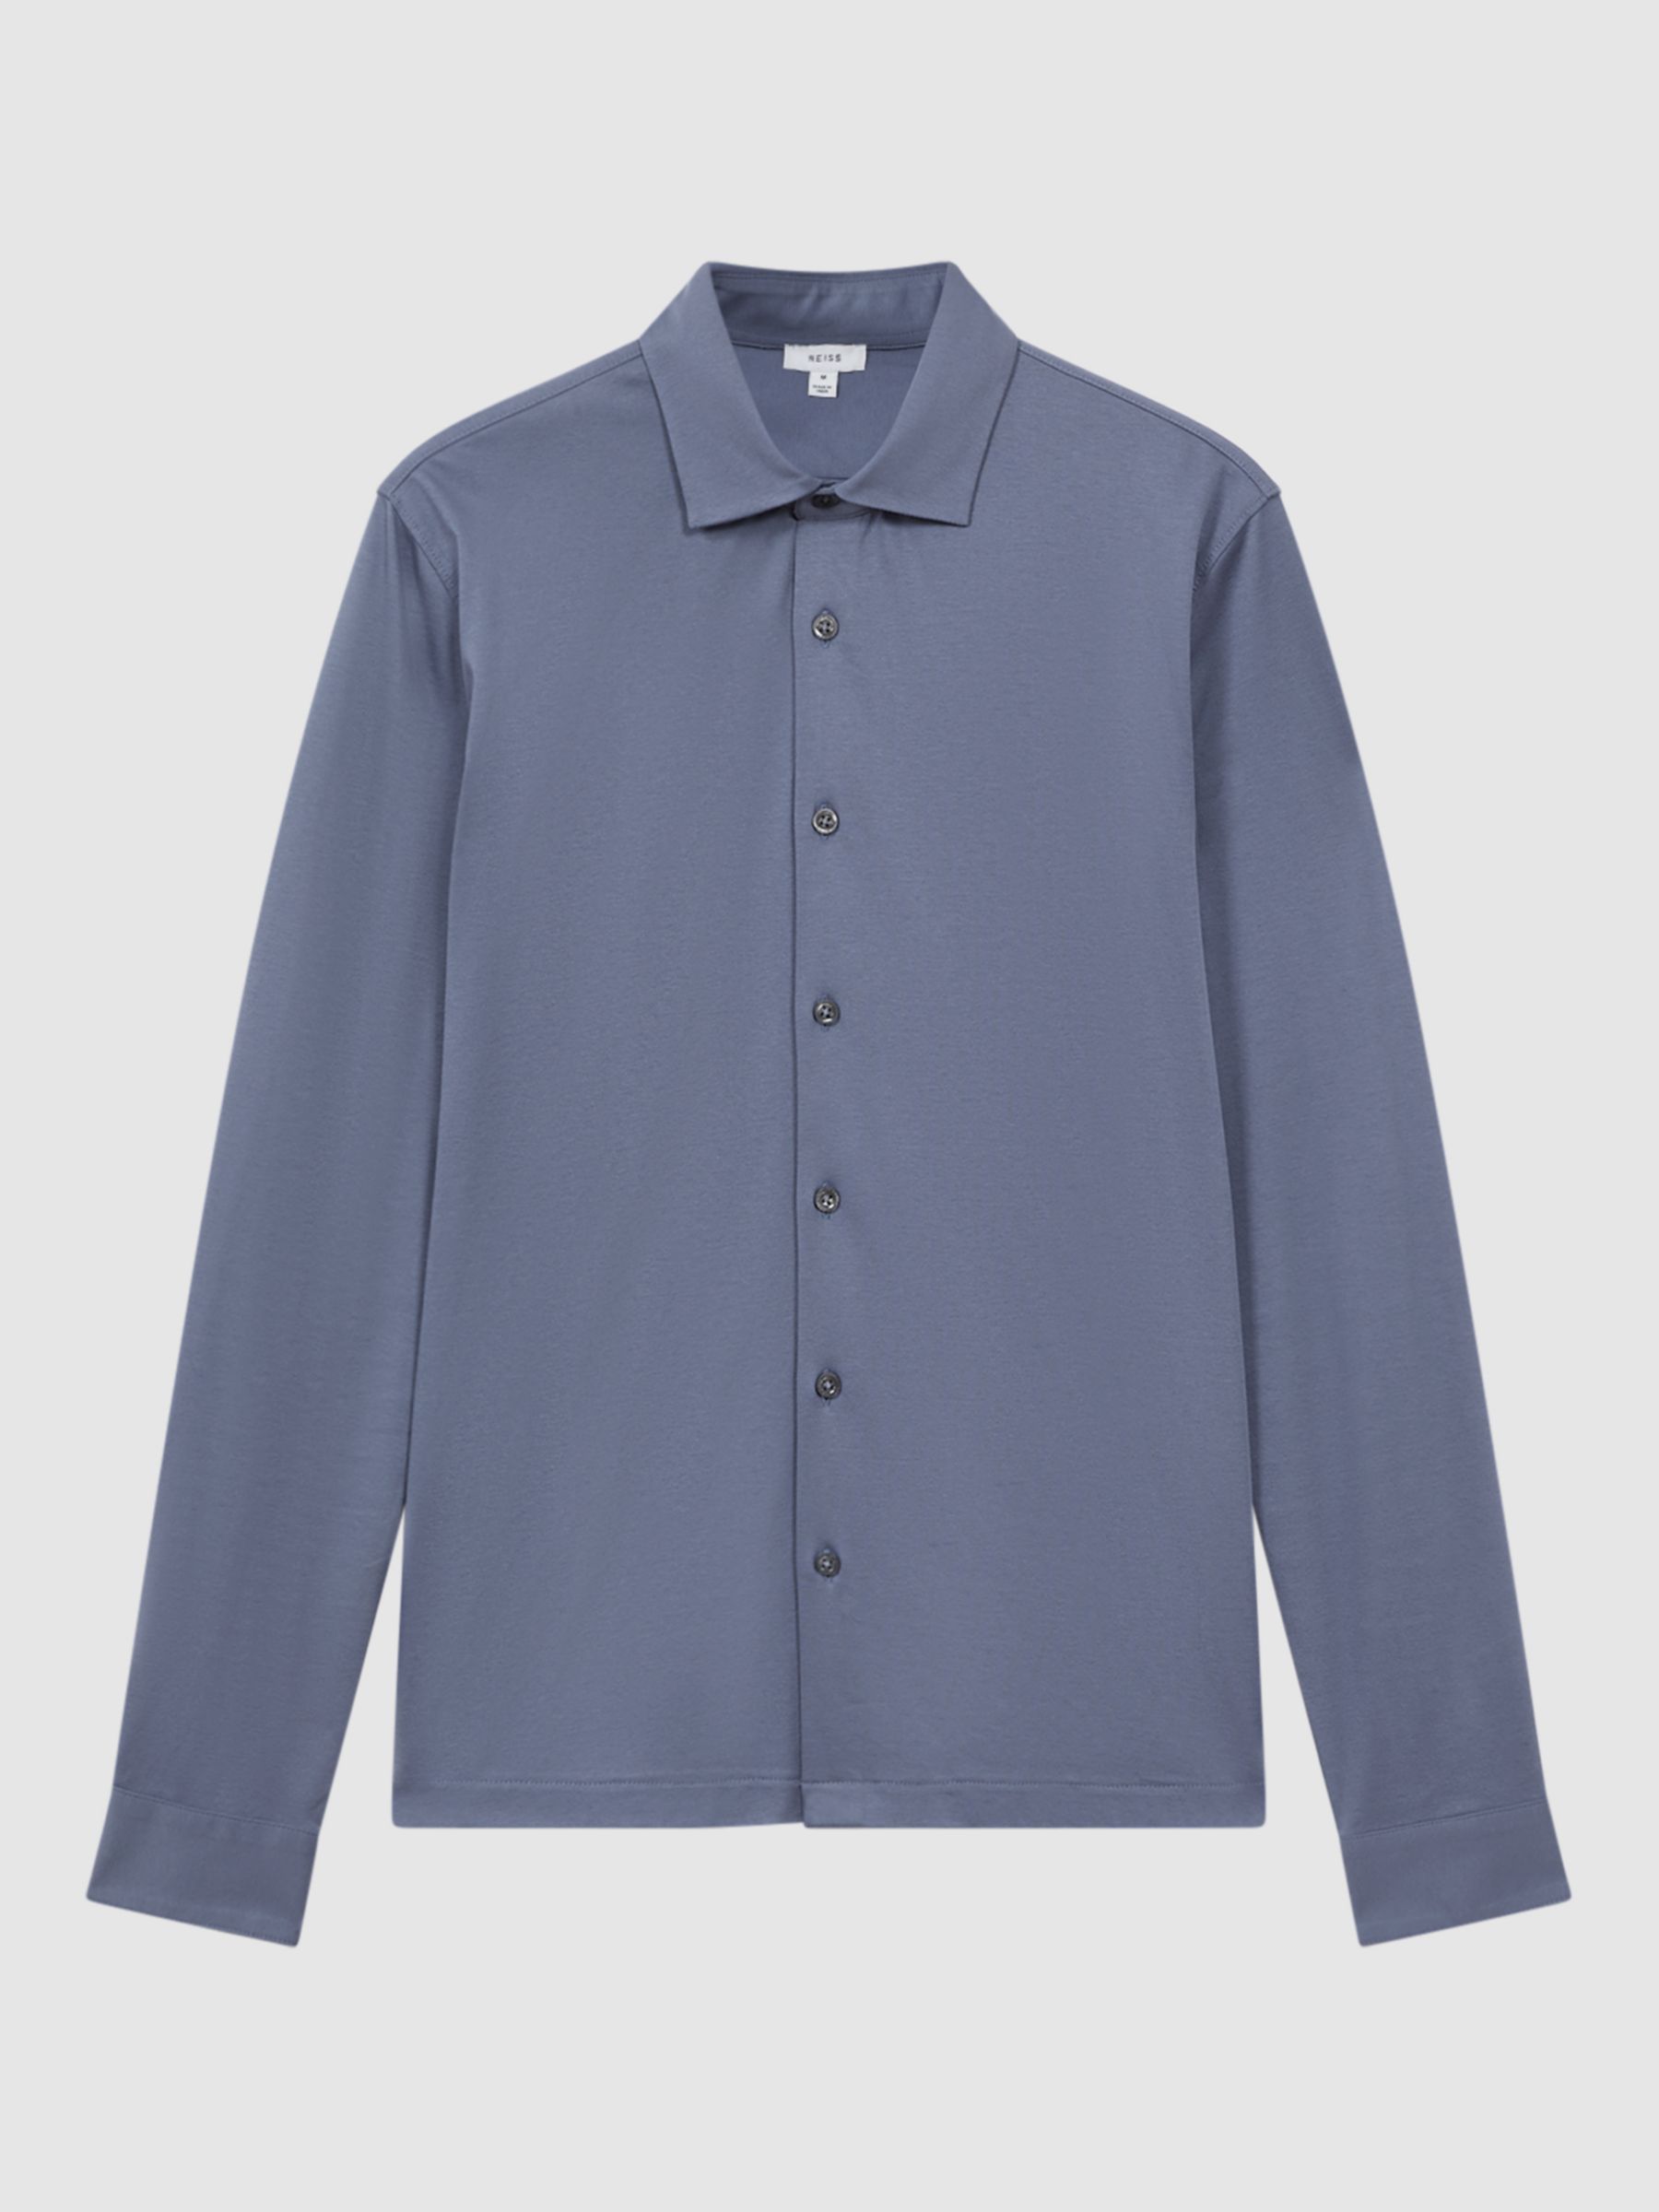 Reiss Viscount Long Sleeve Shirt, Airforce Blue at John Lewis & Partners